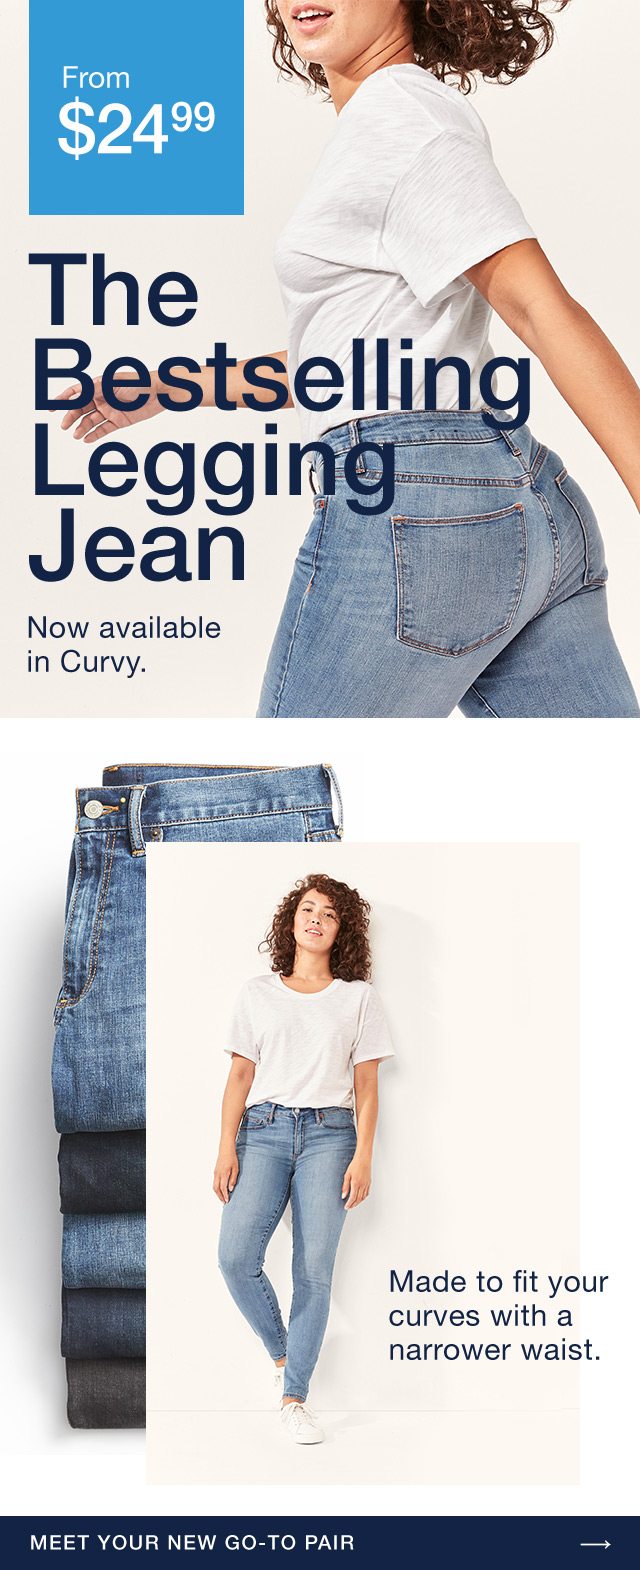 The Bestselling Legging Jean